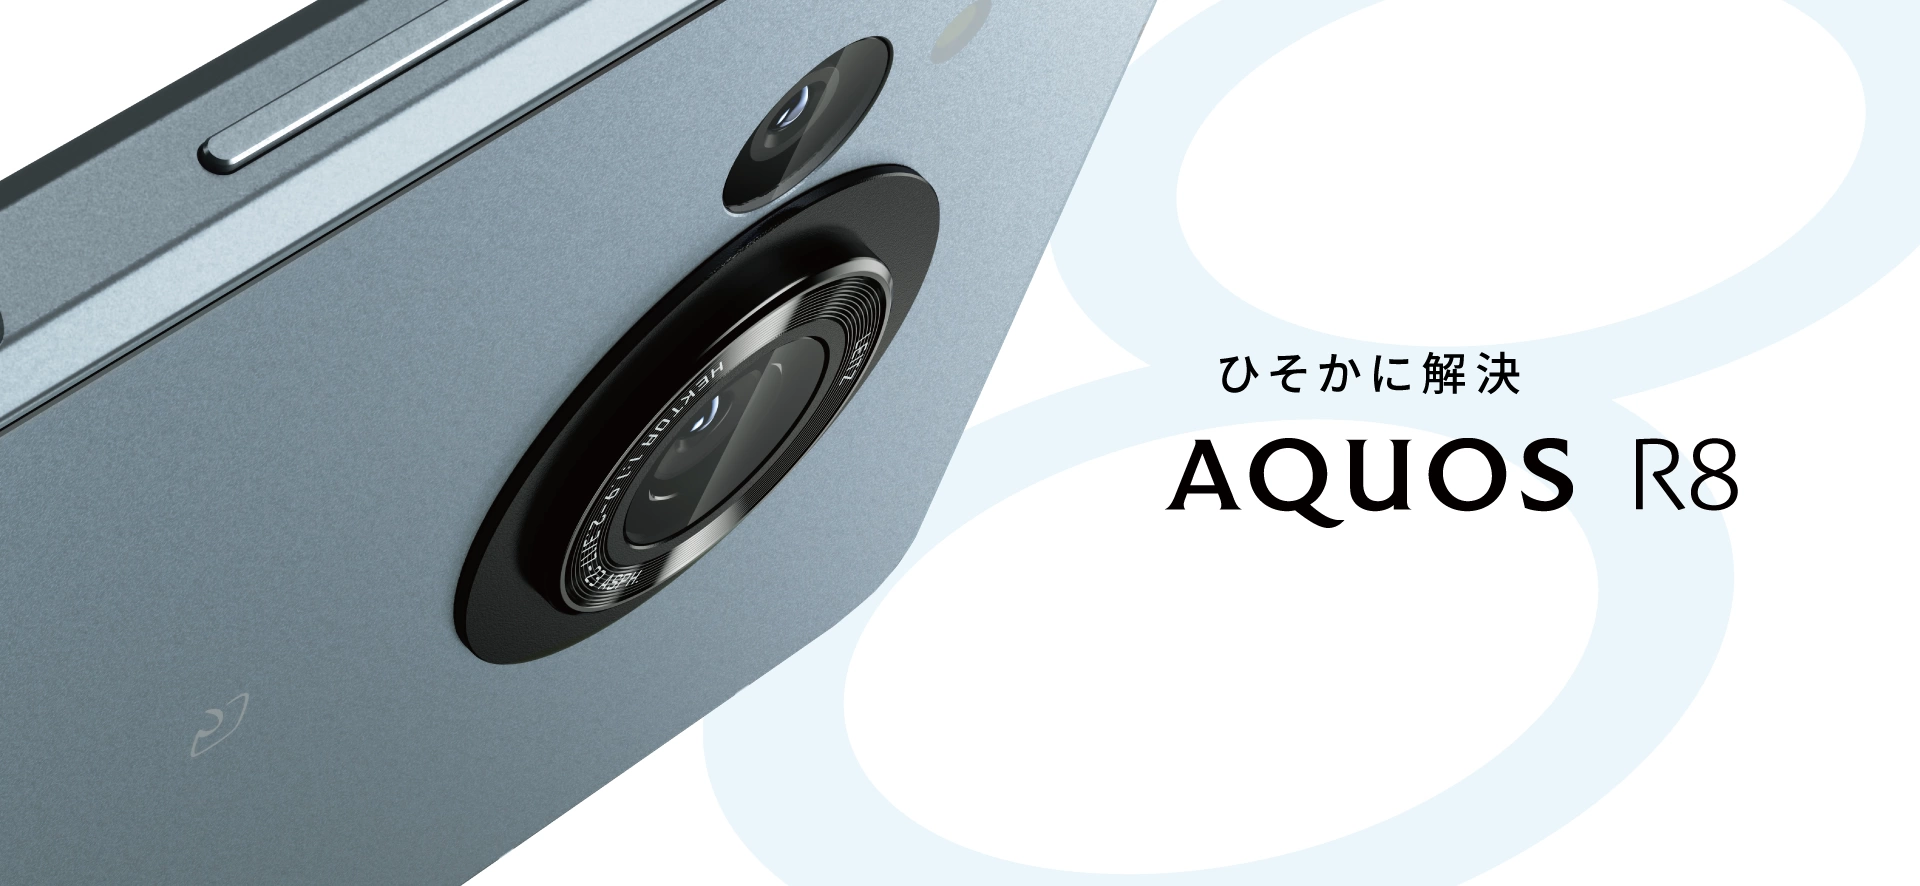 AQUOS R8 製品ページ